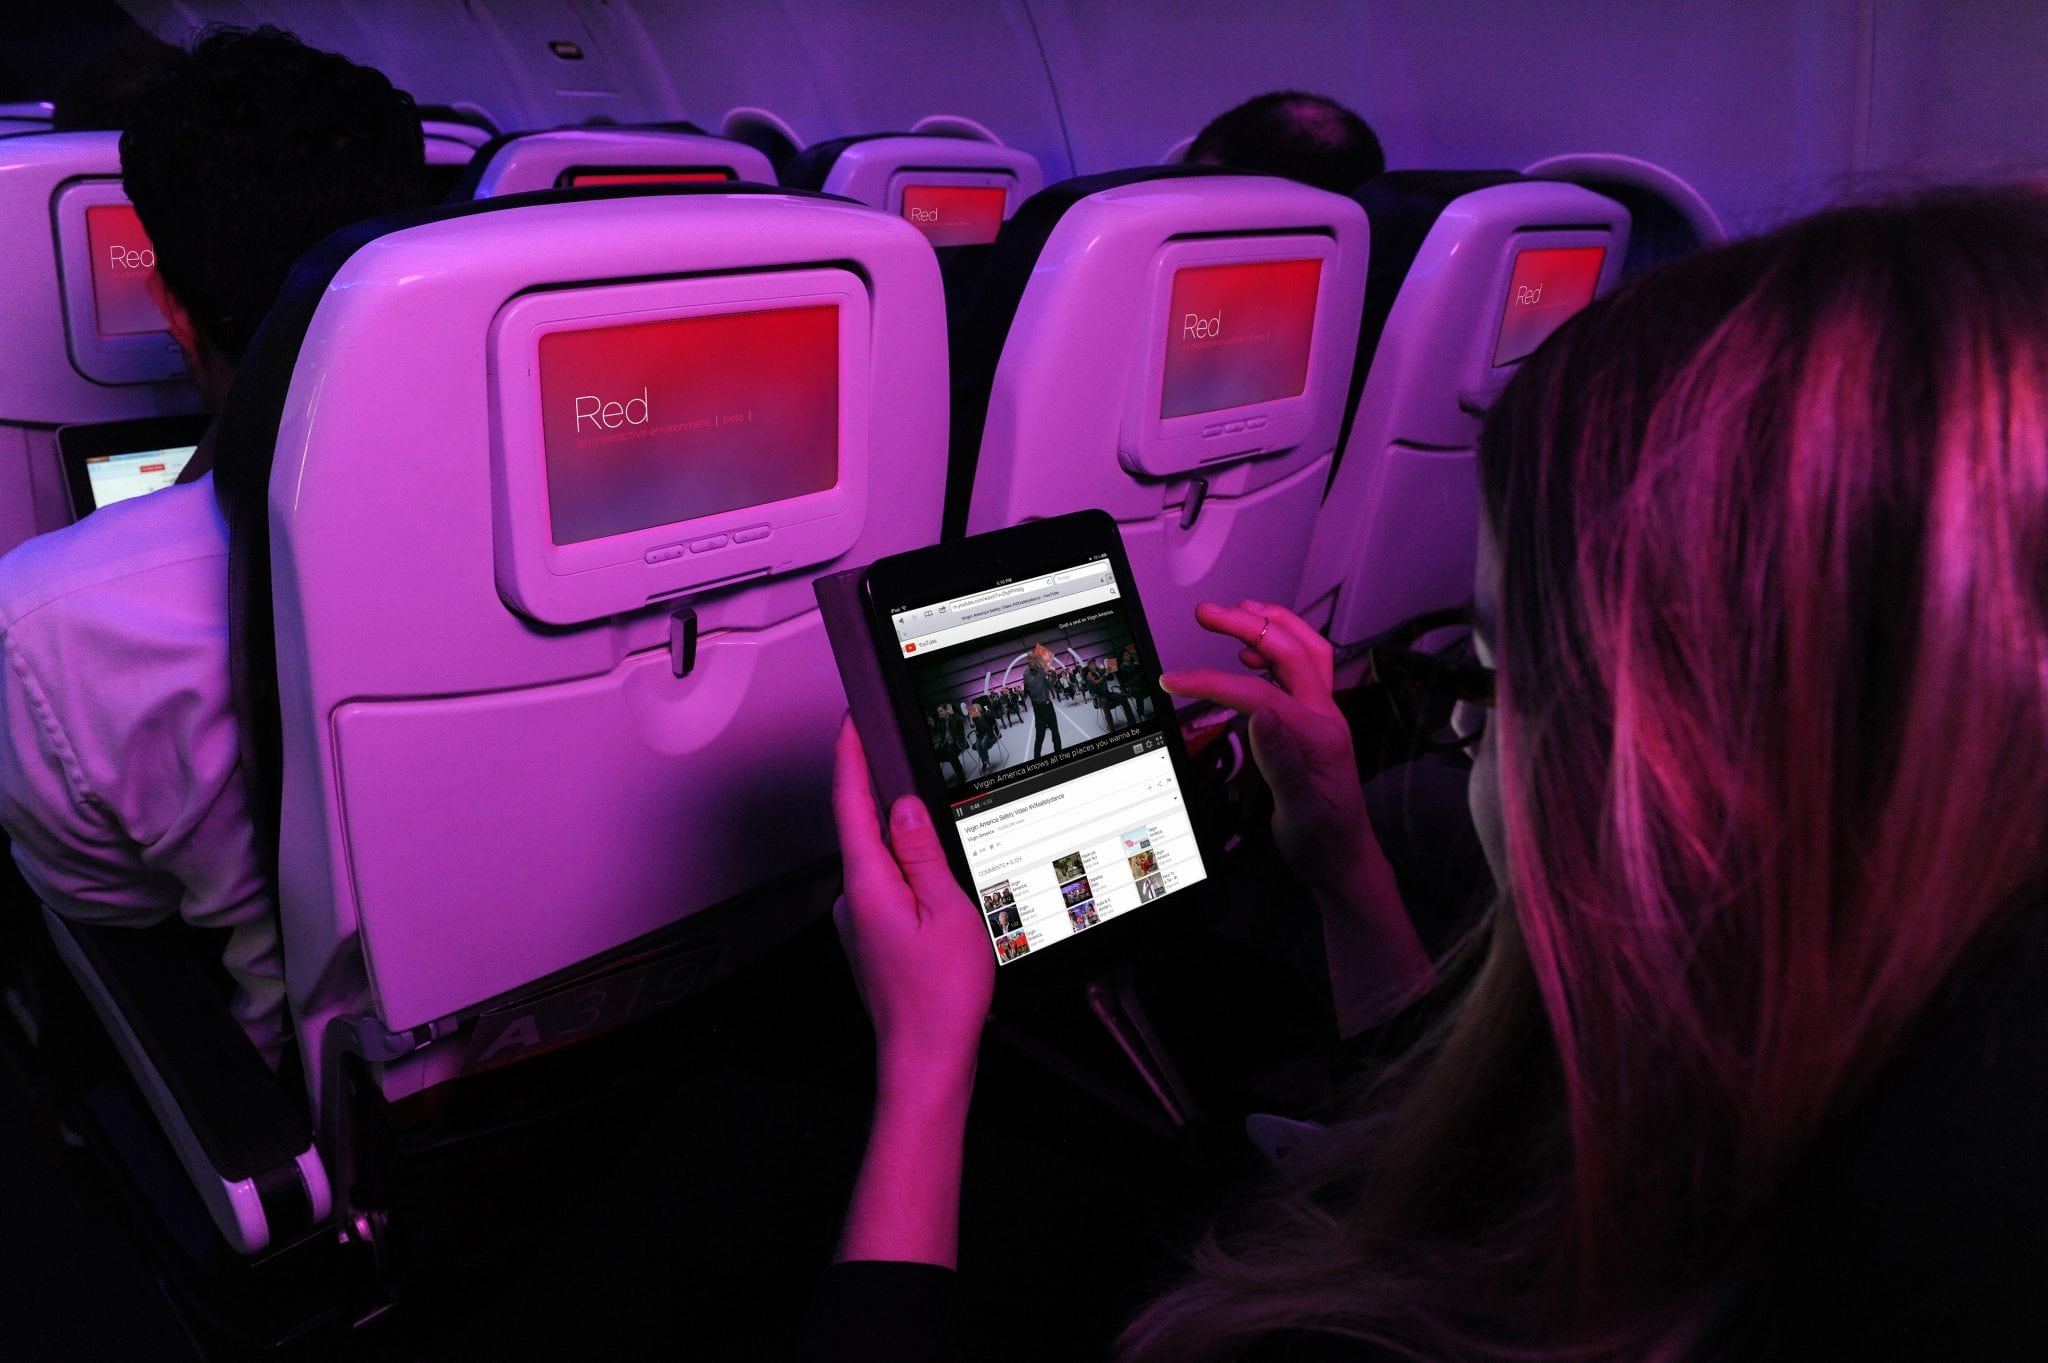 Virgin America passenger using the in-flight Wi-Fi